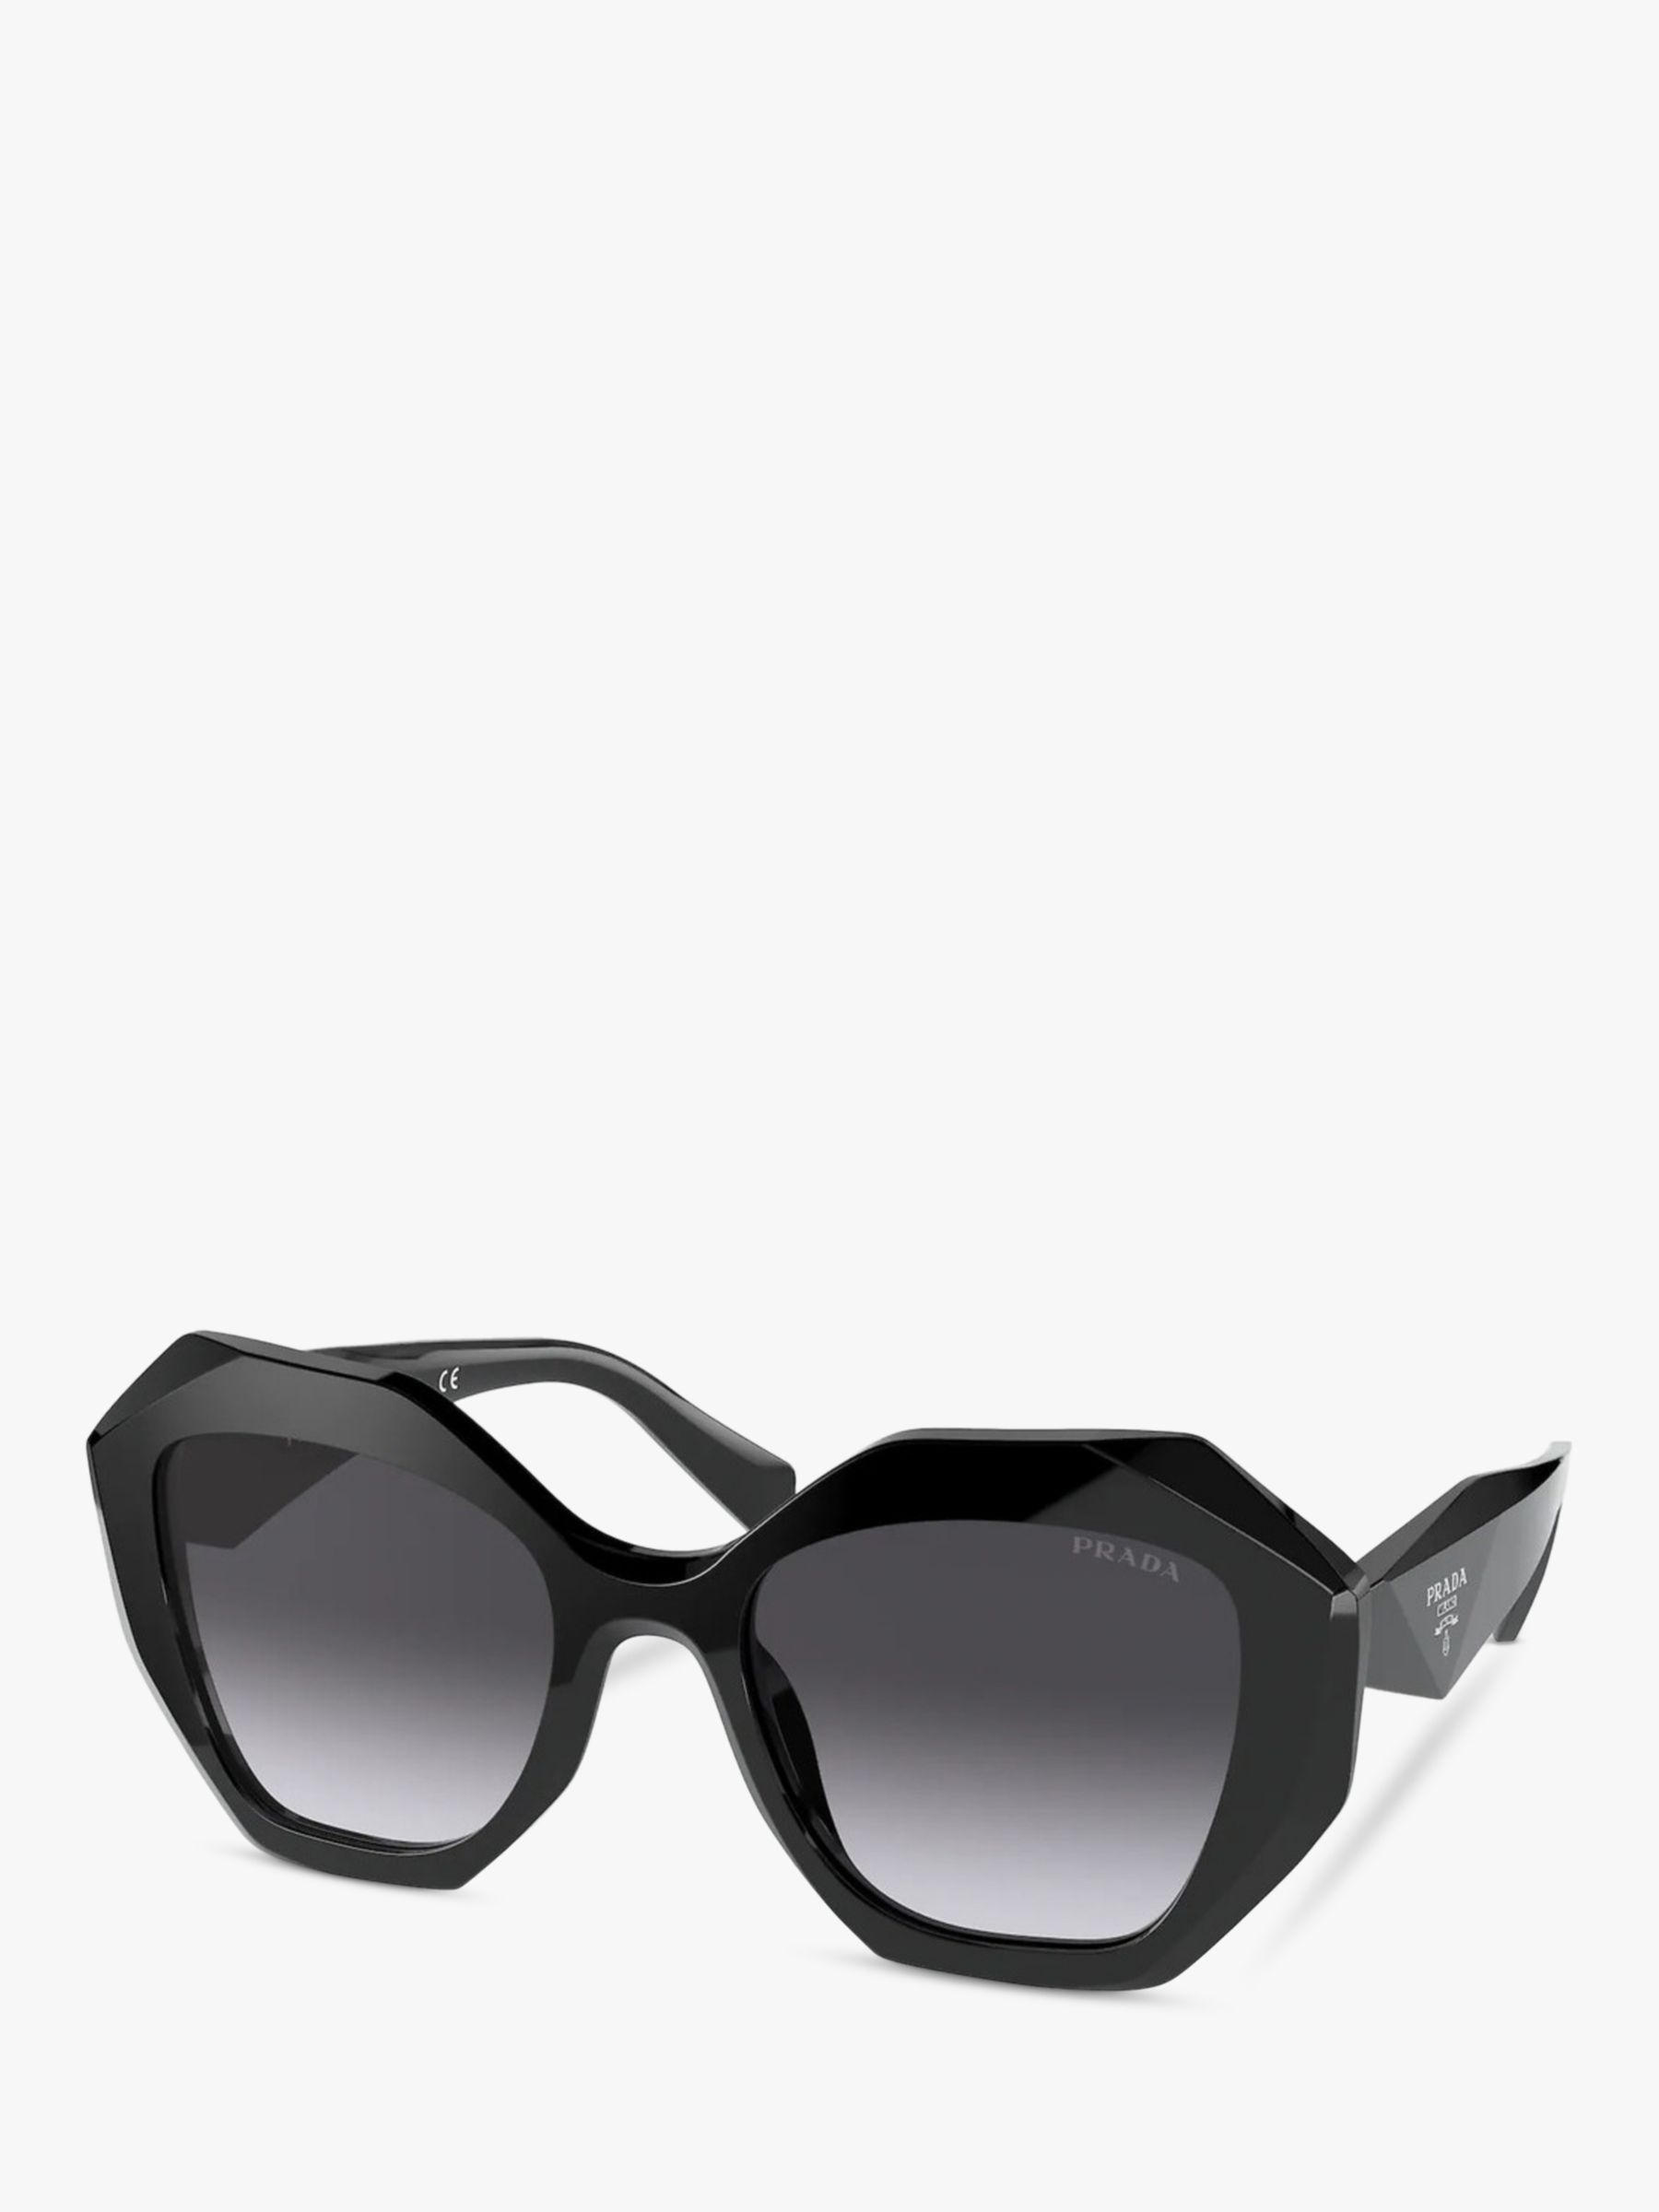 Prada PR 16WS Women's Irregular Shaped Sunglasses, Black/Black Gradient ...